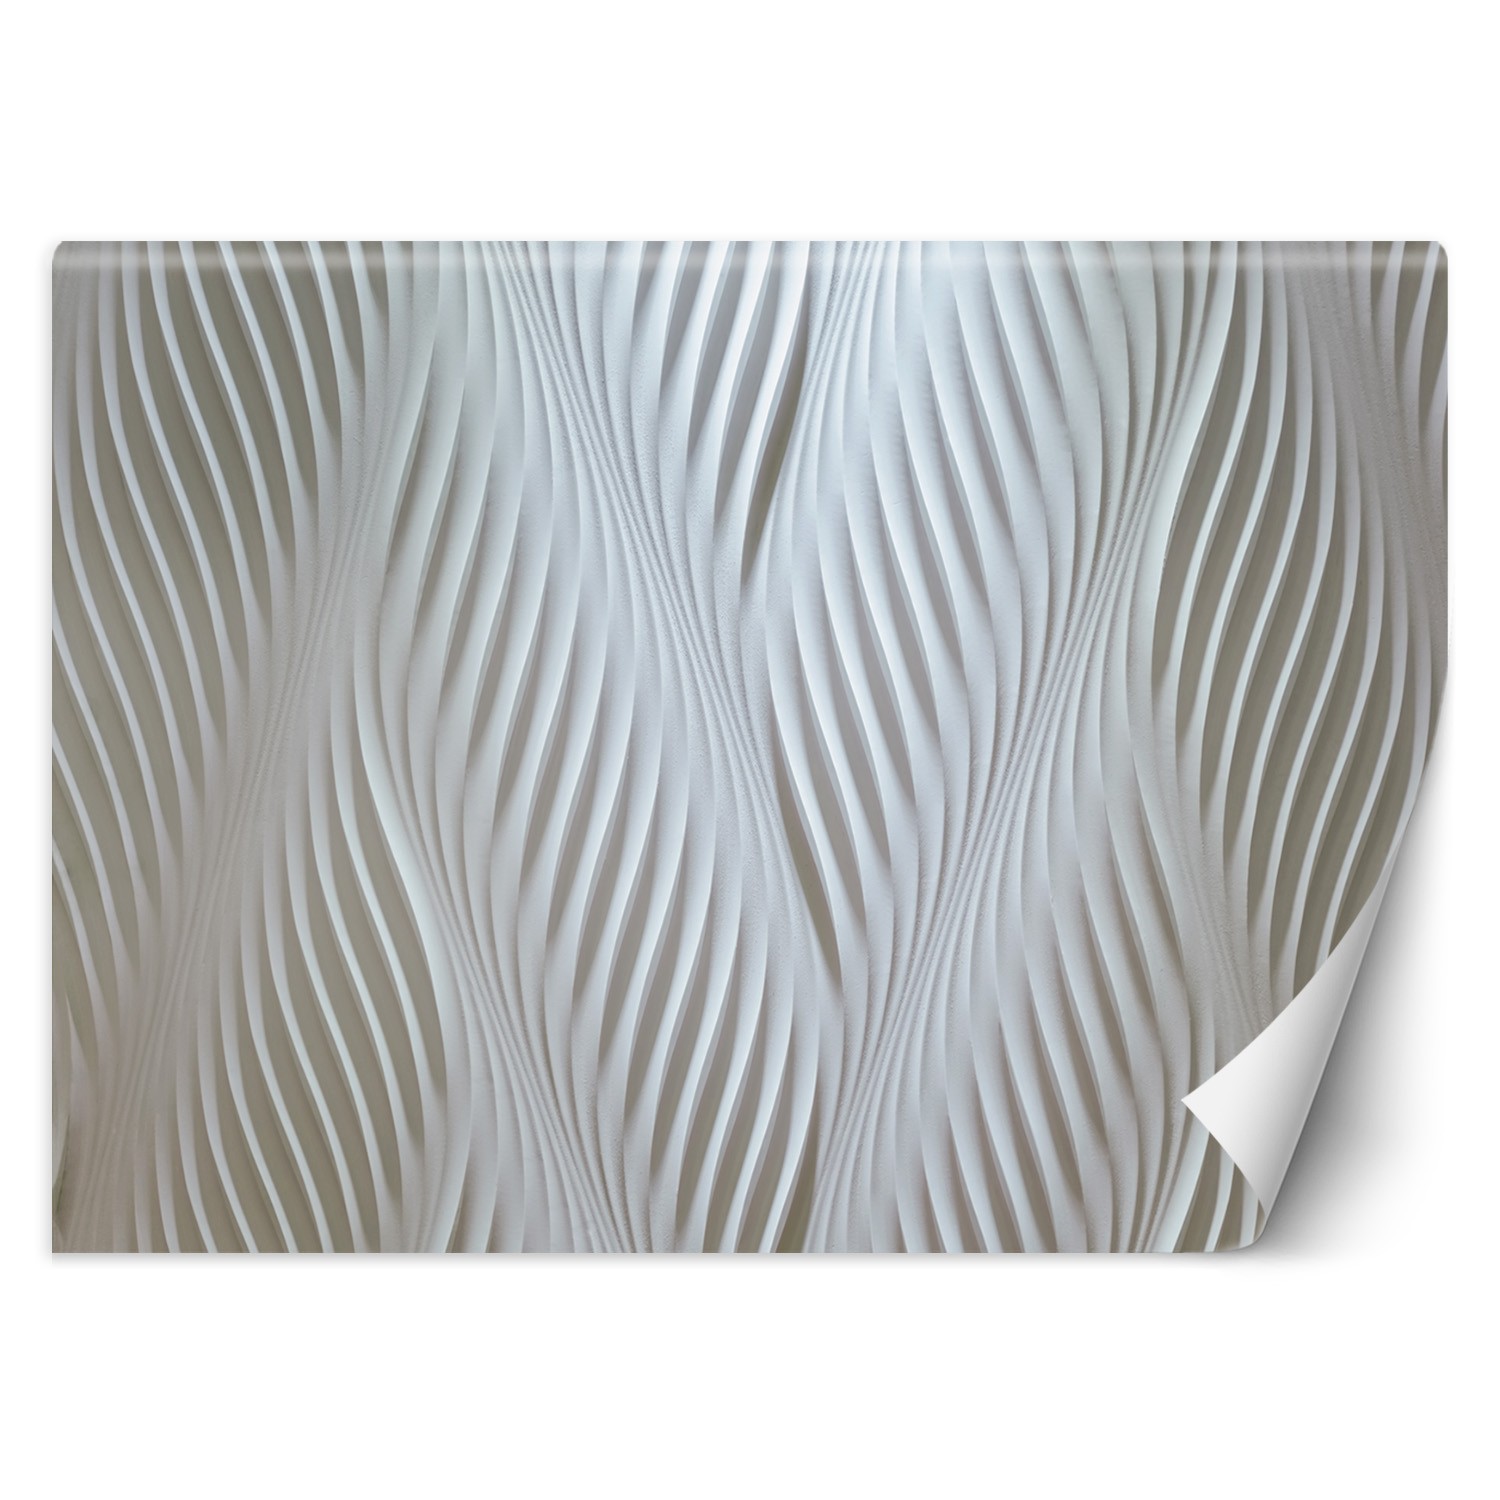 Trend24 – Behang – Golven In Abstract – Vliesbehang – Fotobehang 3D – Behang Woonkamer – 350x245x2 cm – Incl. behanglijm